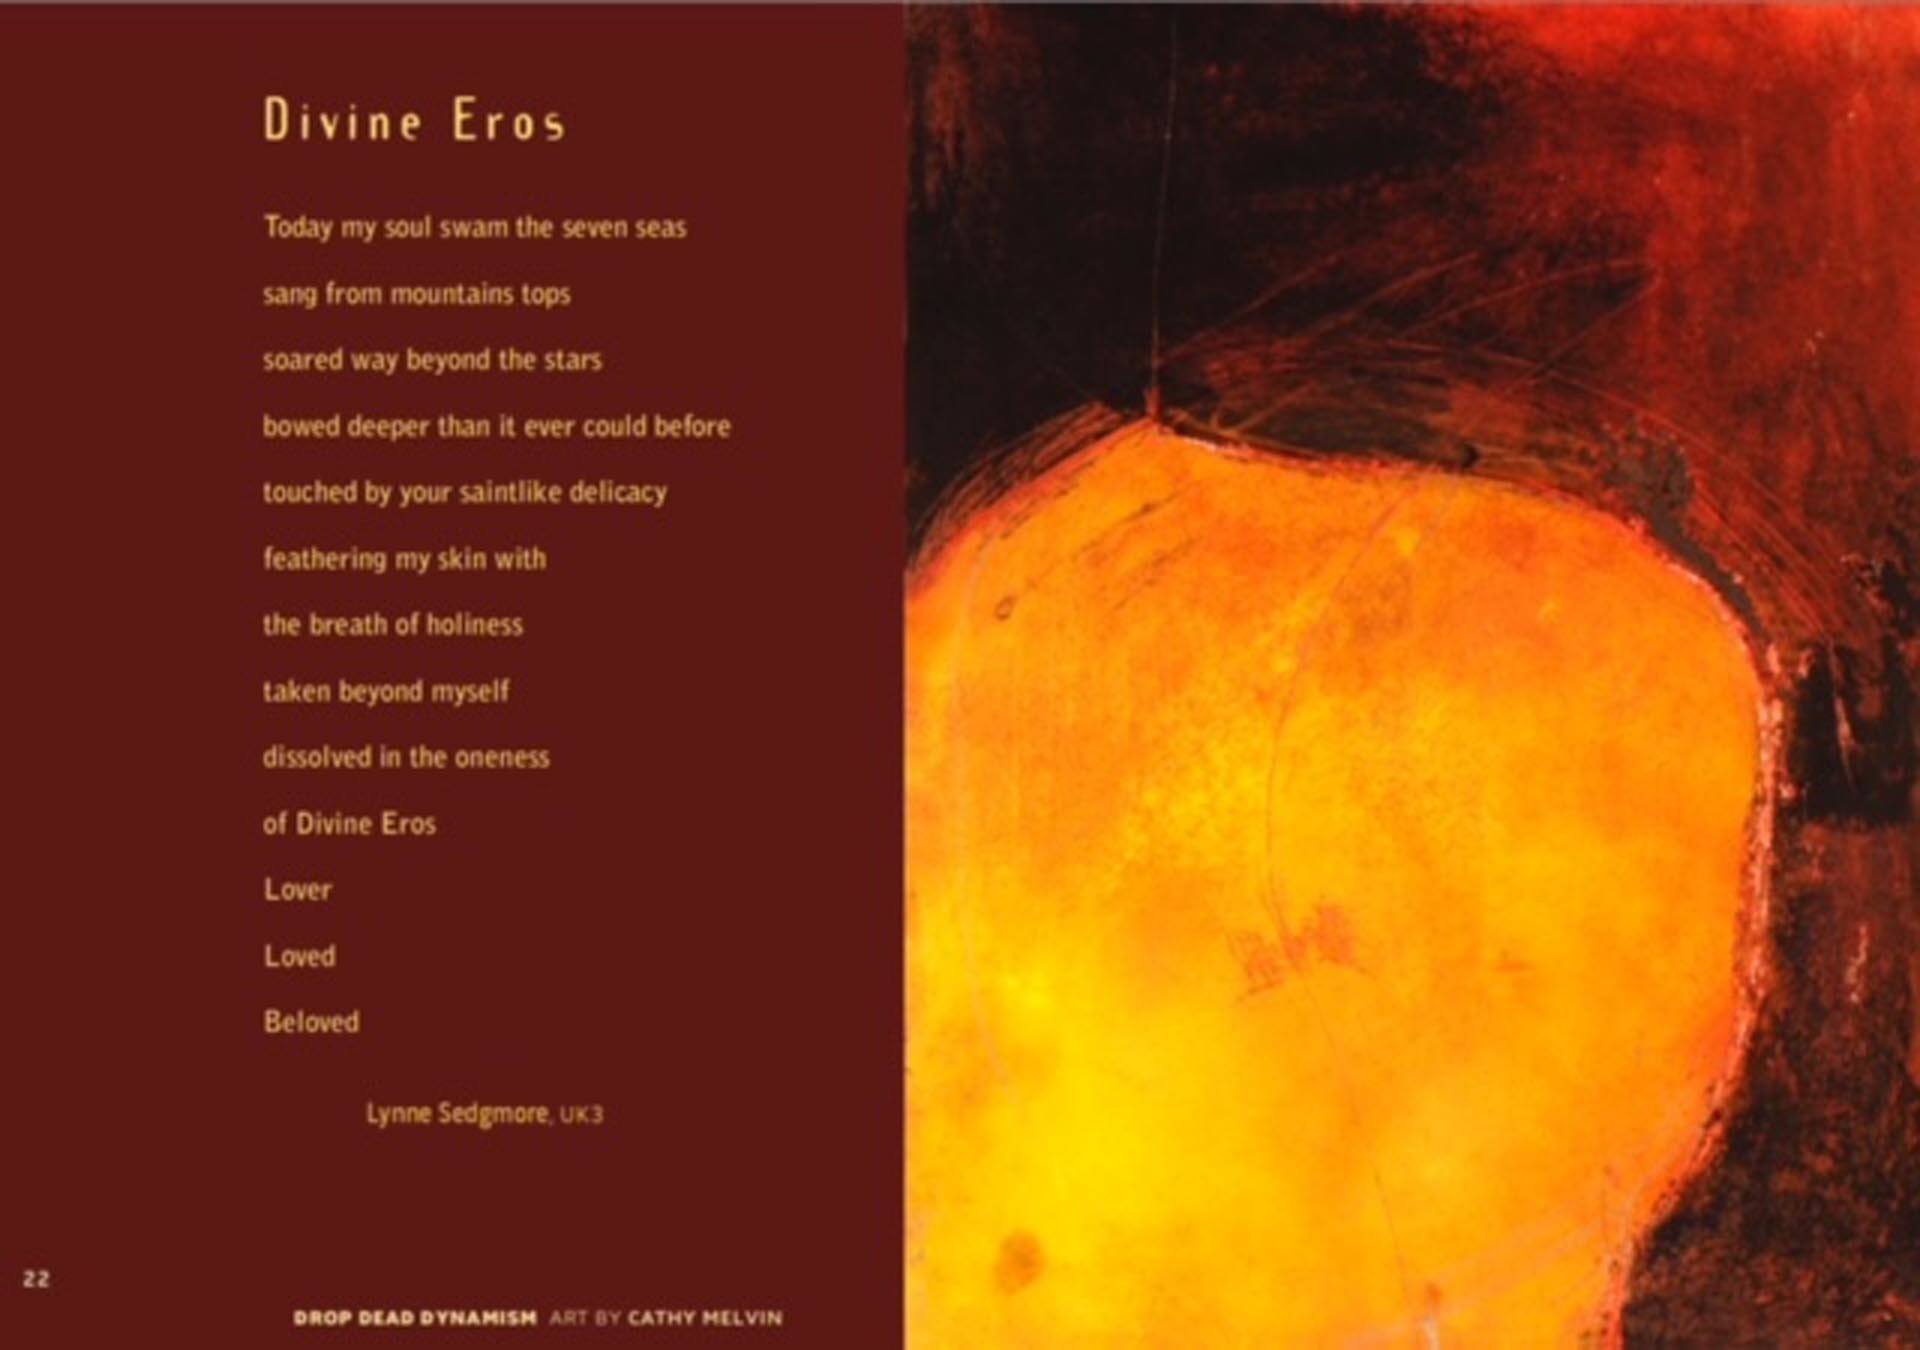 Lynne Sedgmore Poems